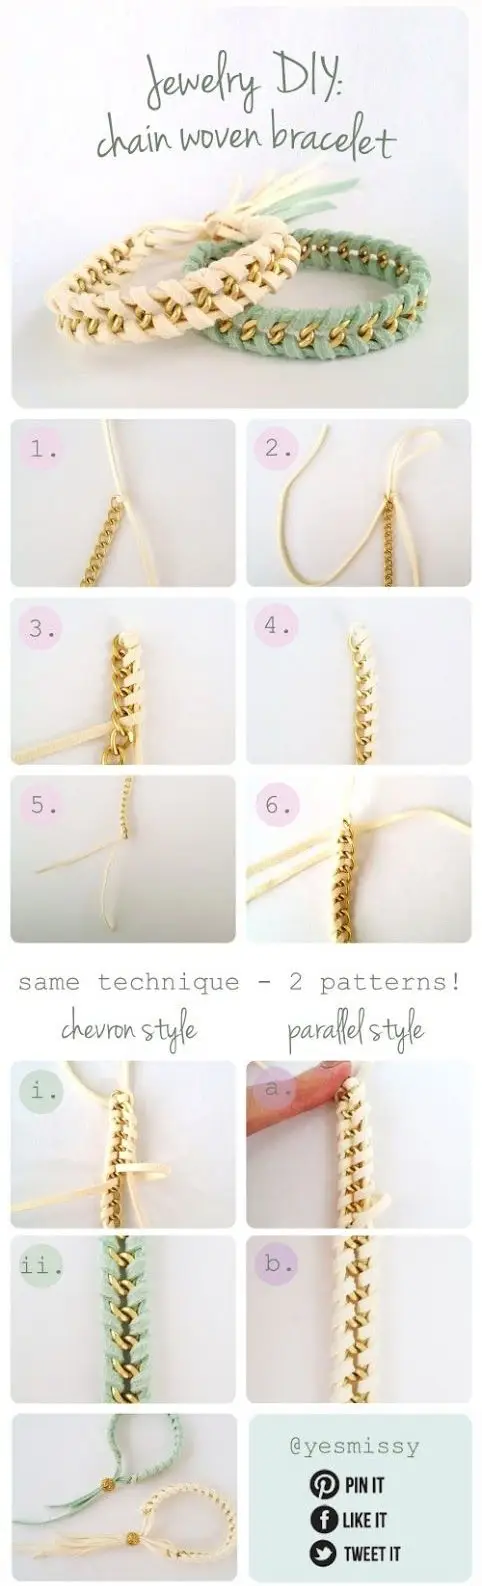 Chain Woven Bracelet